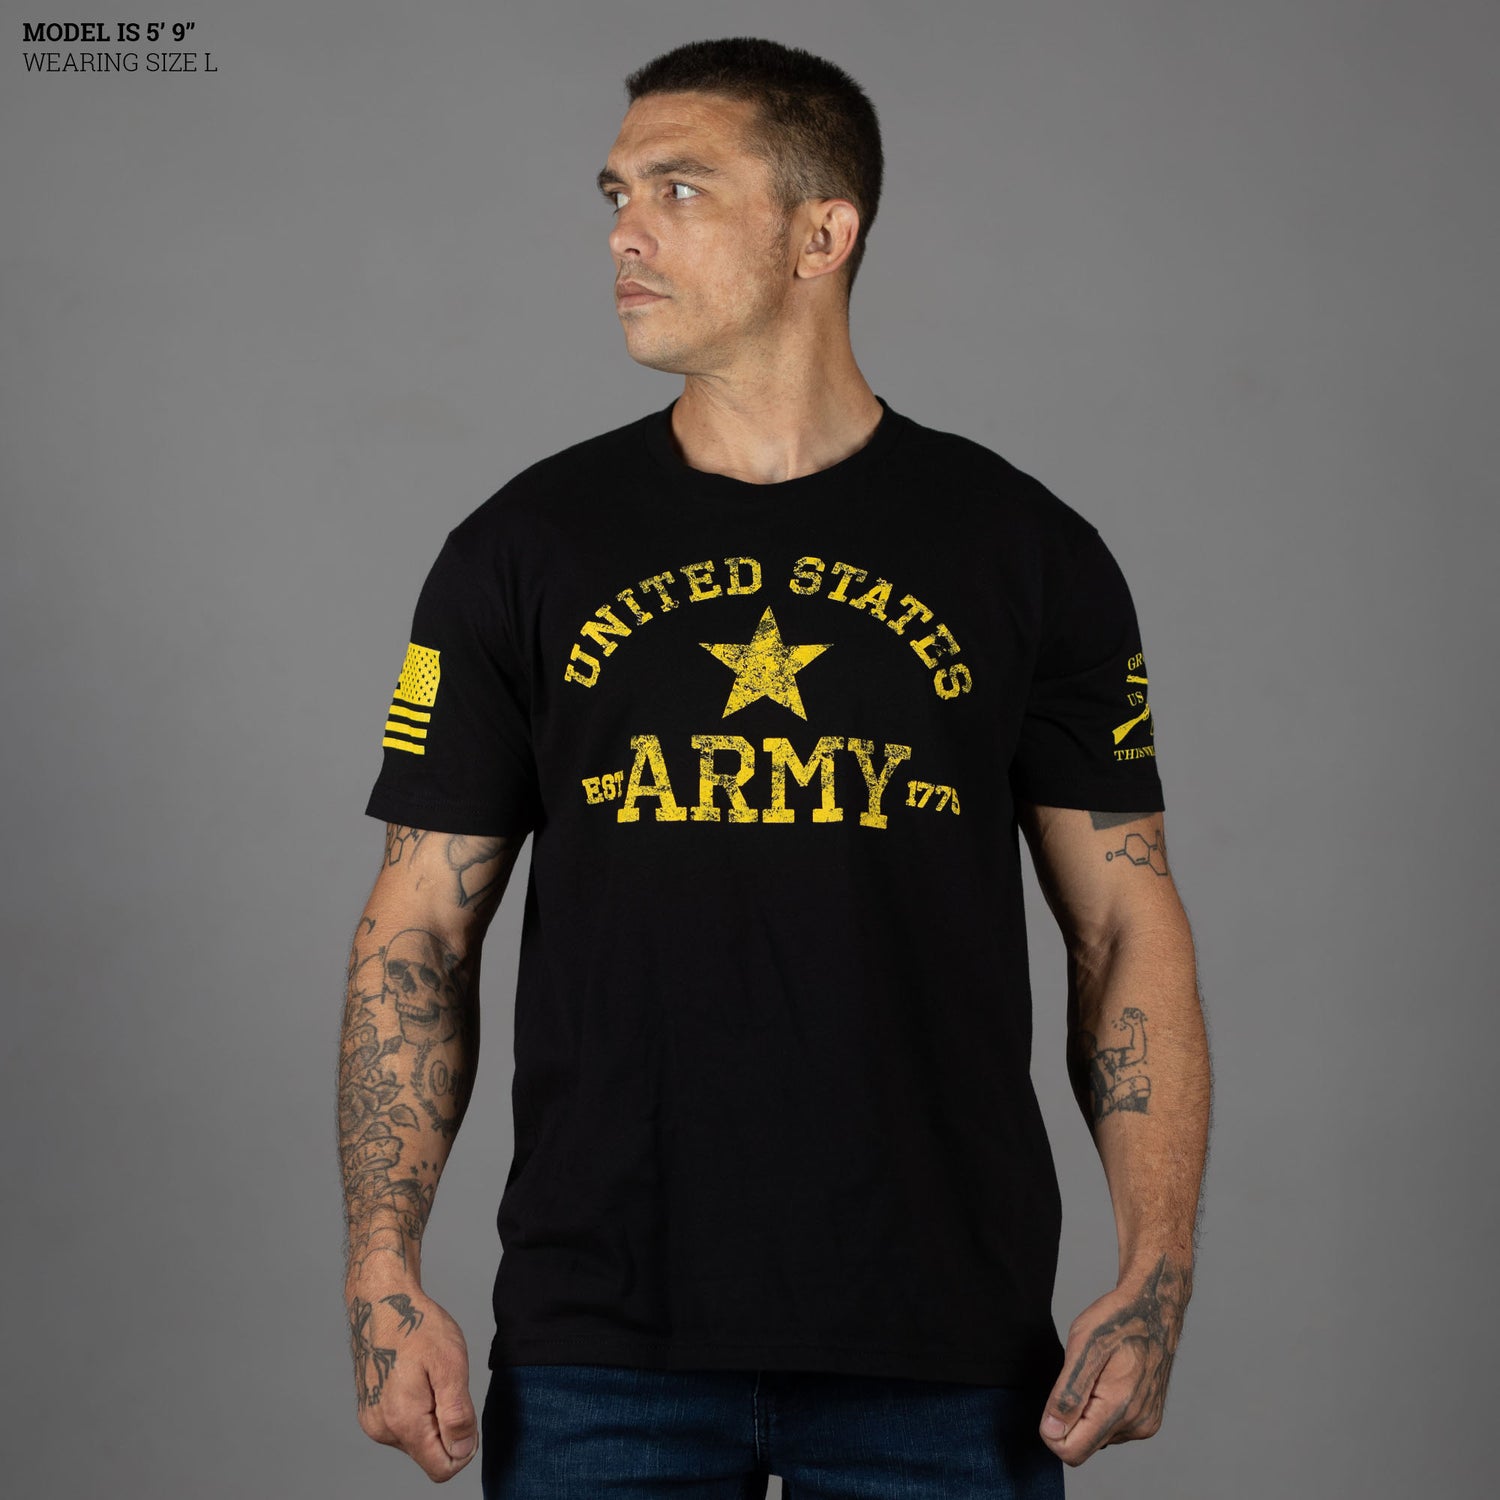 United States Army Shirt